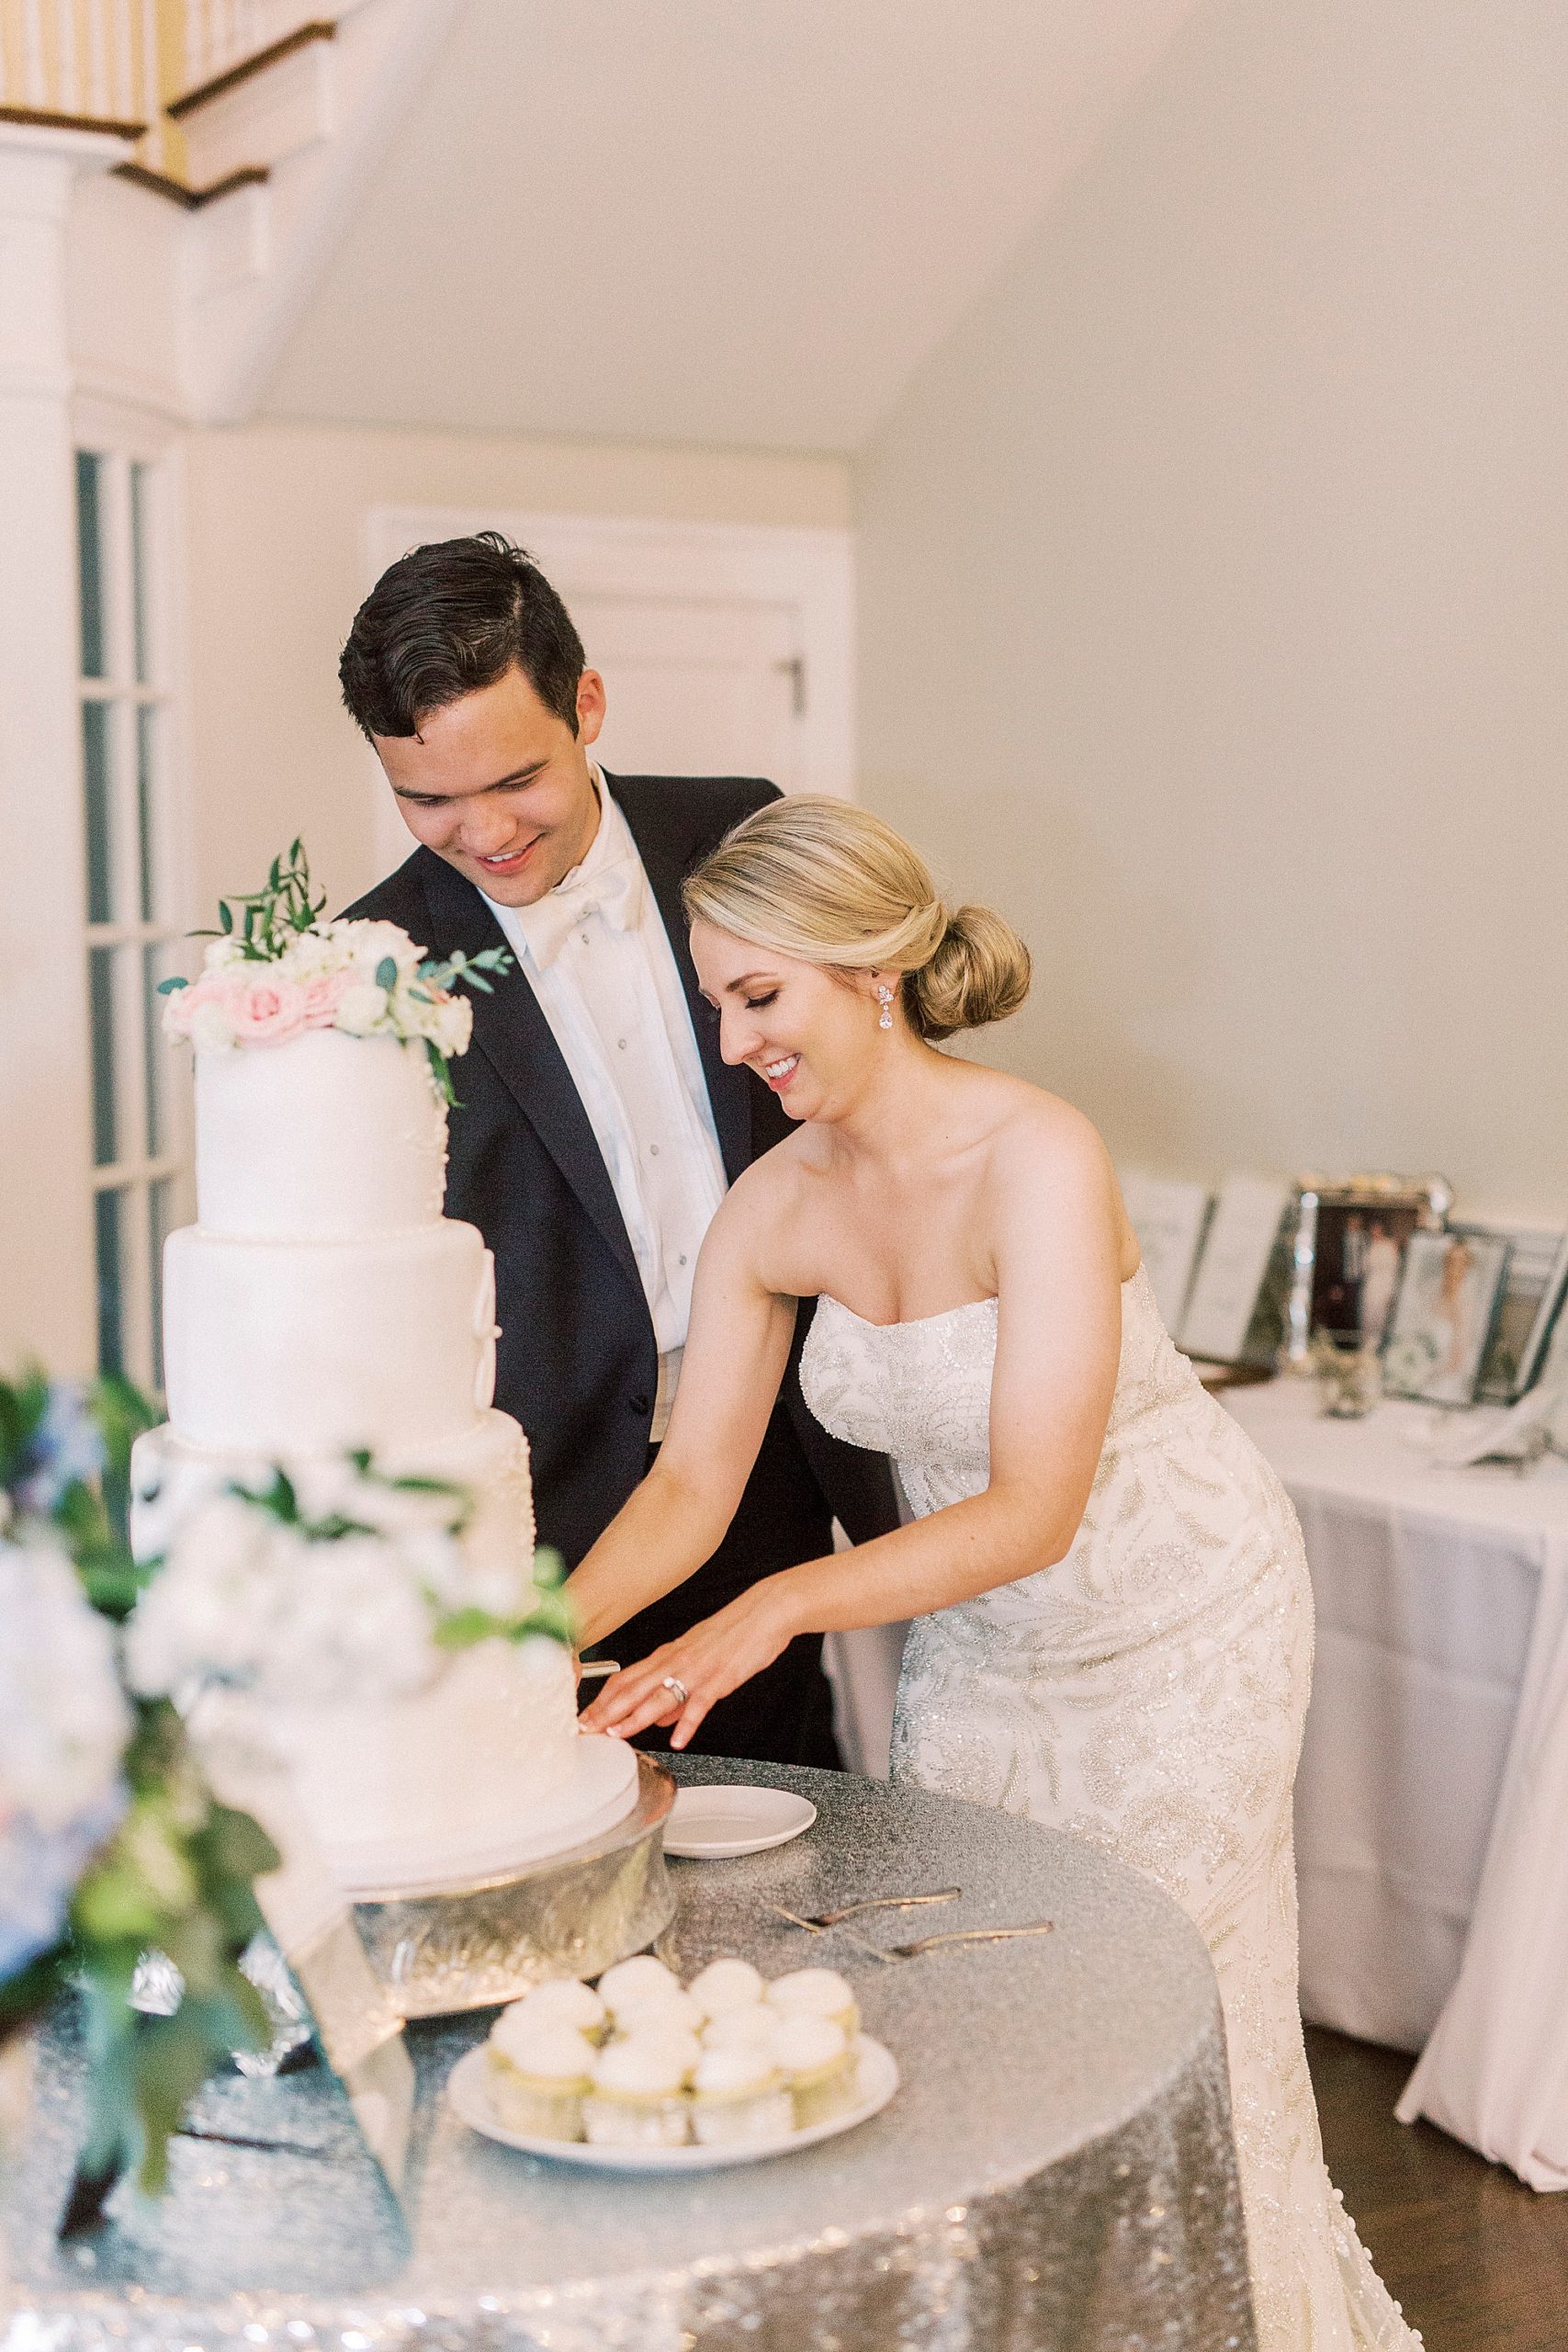 bride and groom cut wedding cake during elegant Charlotte wedding reception